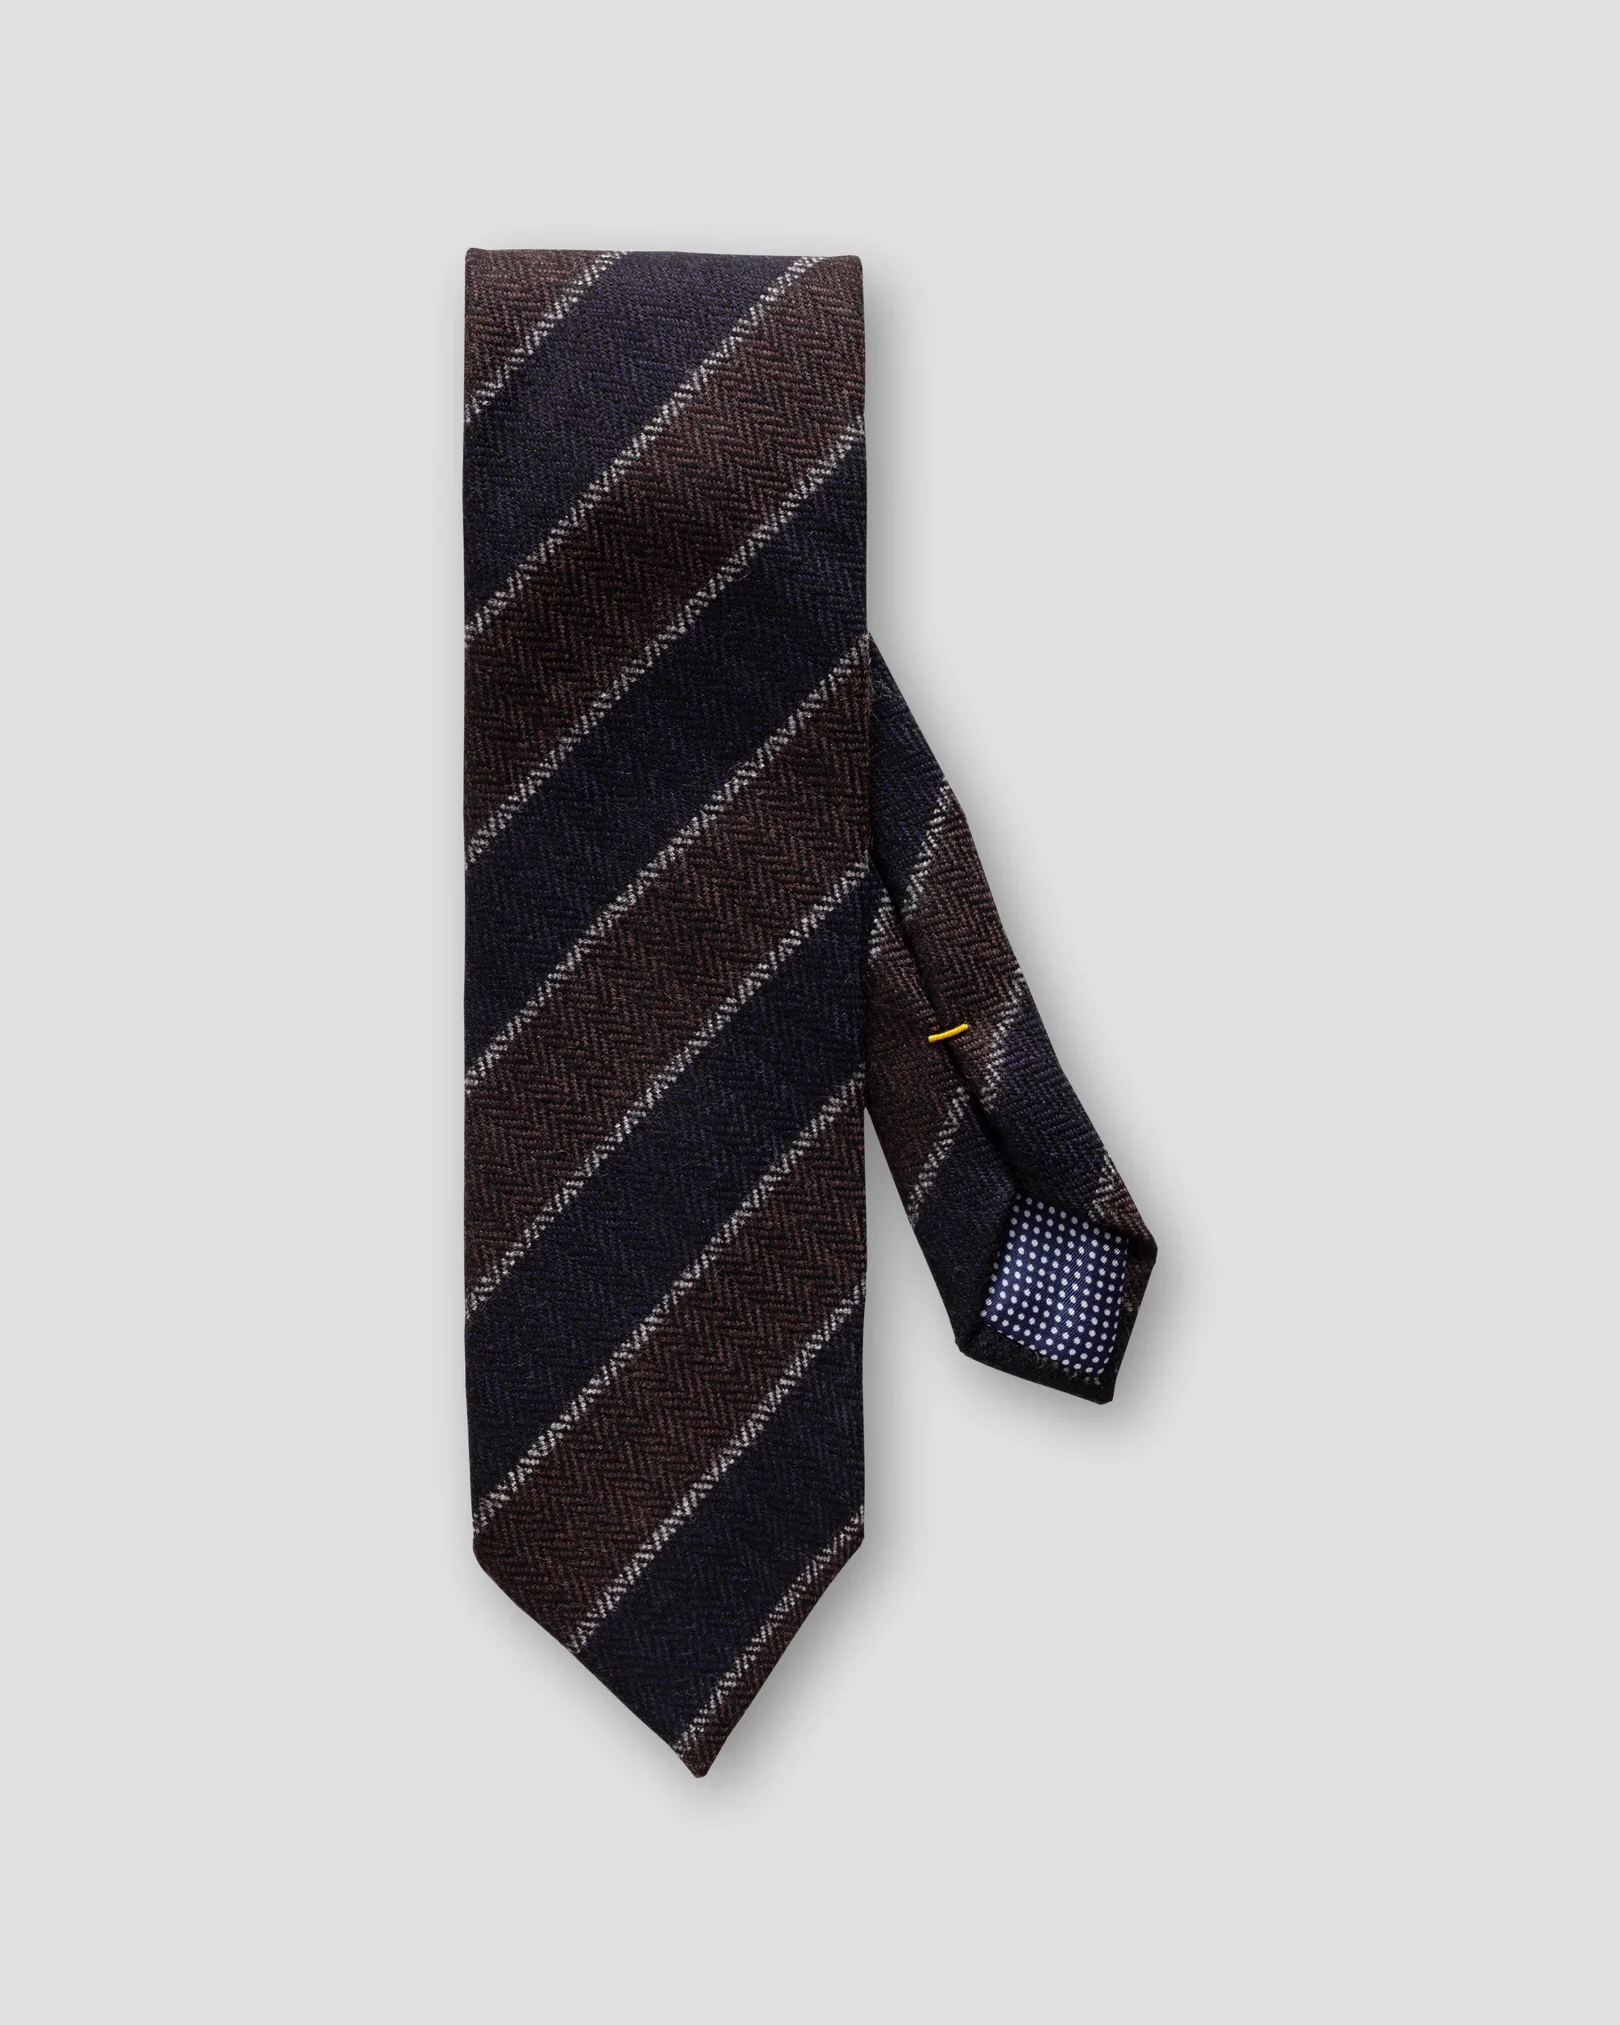 Eton - brown navy regimental striped wool tie